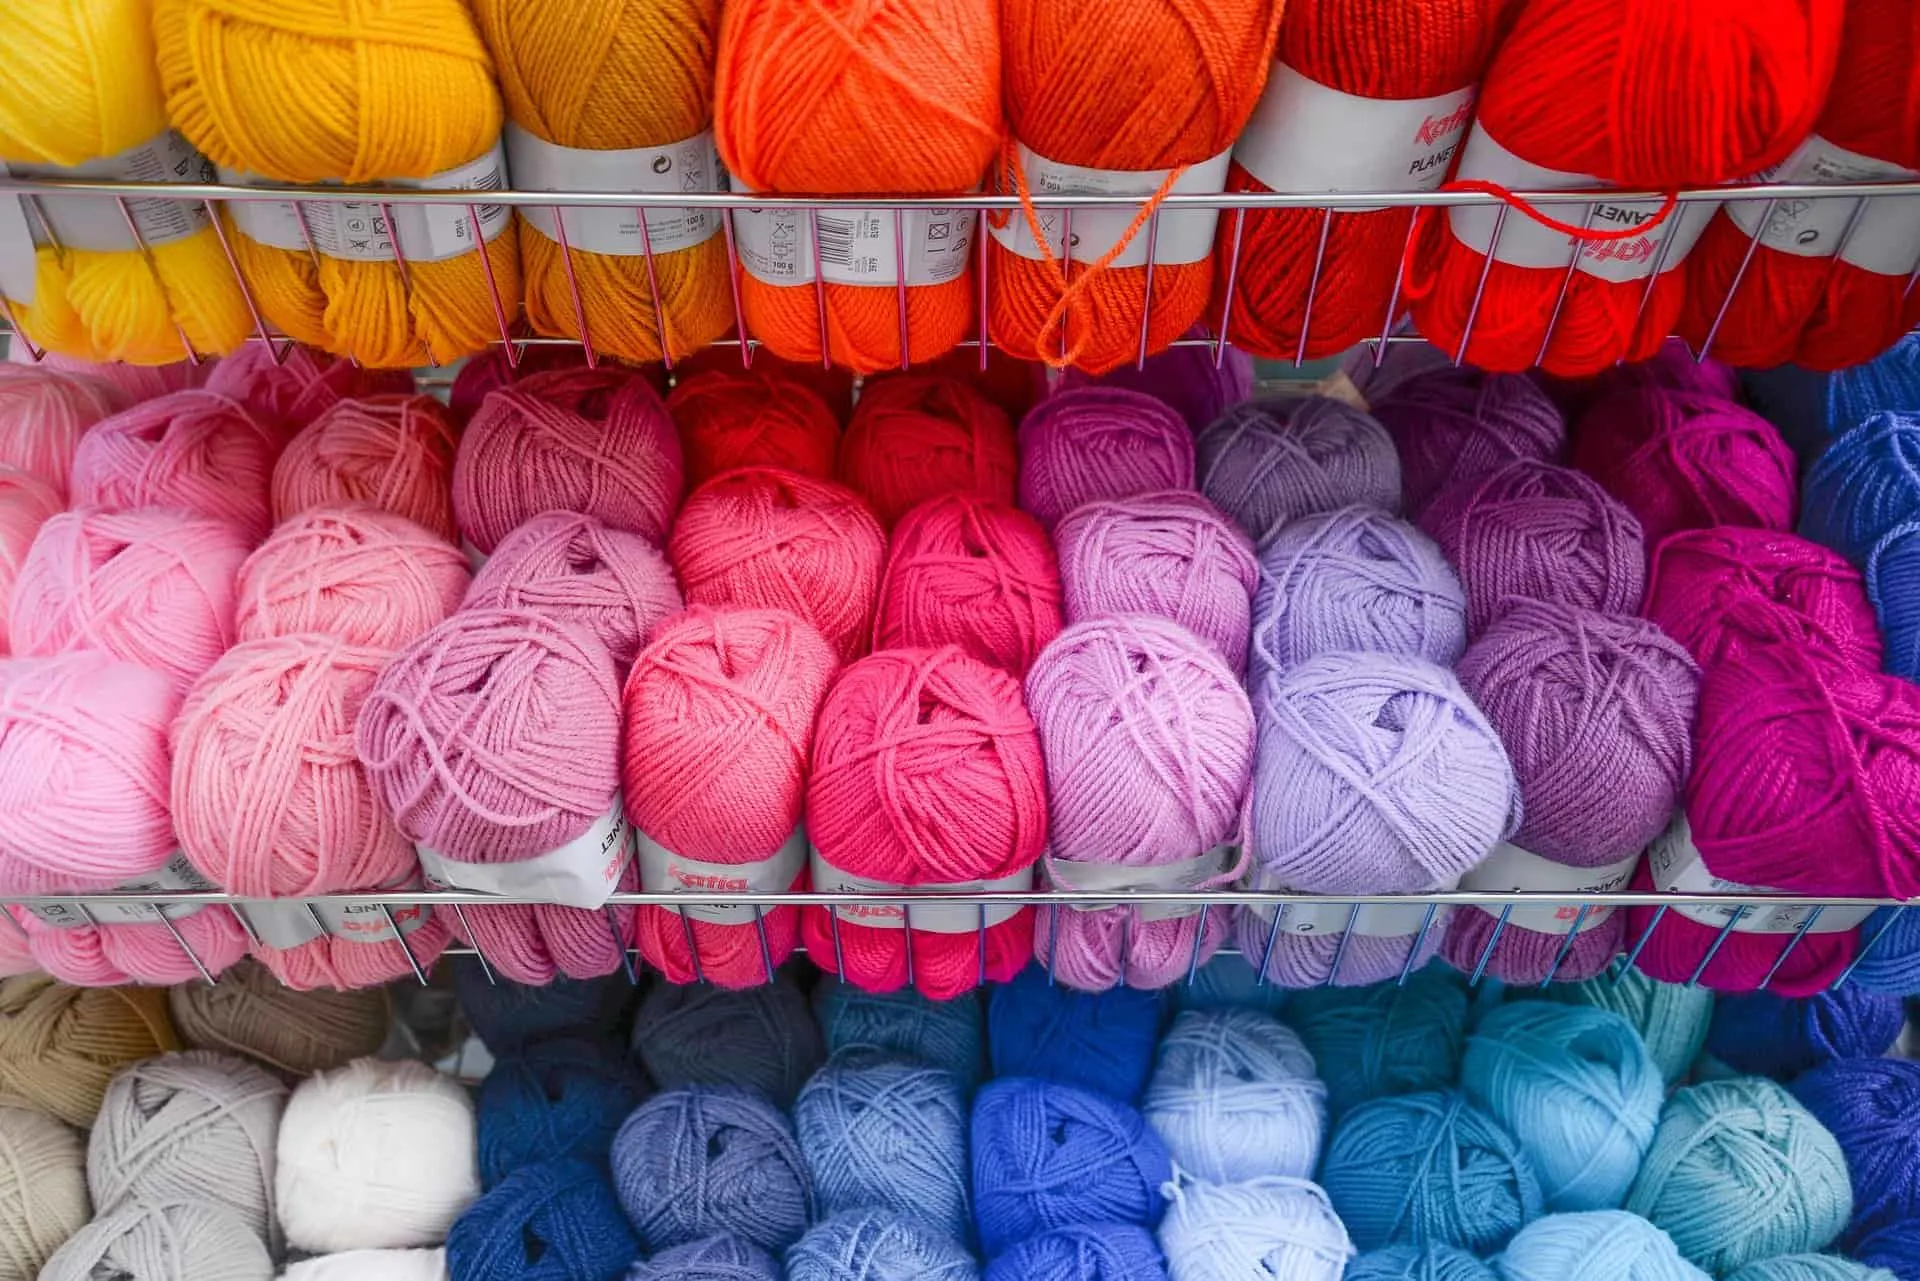 colorful skeins of yarn